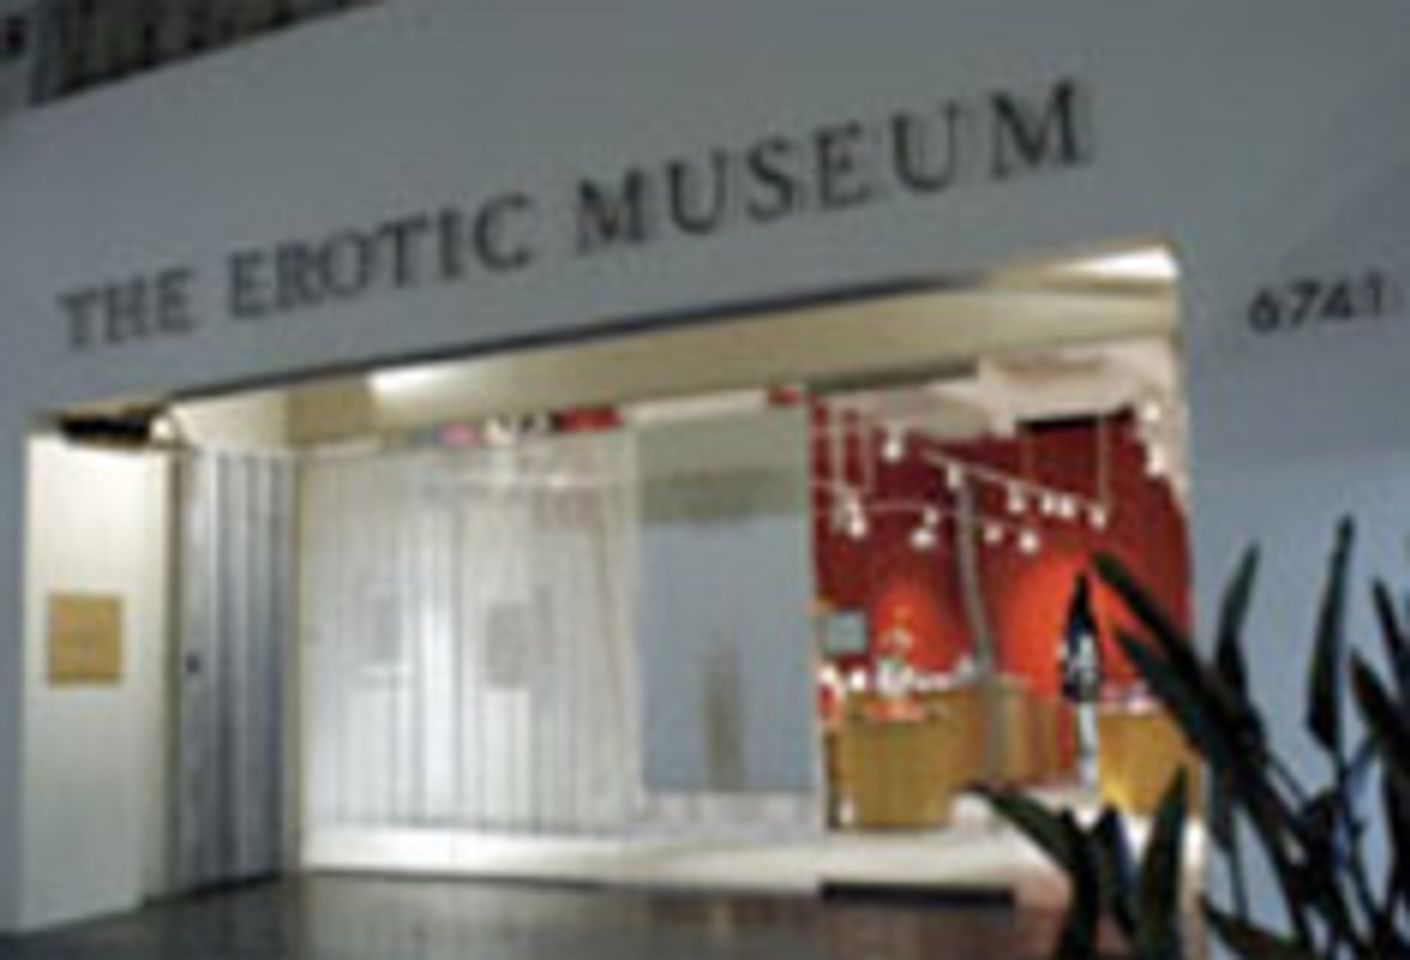 Erotica LA Presents Second Annual Summer Exhibition with The Erotic Museum